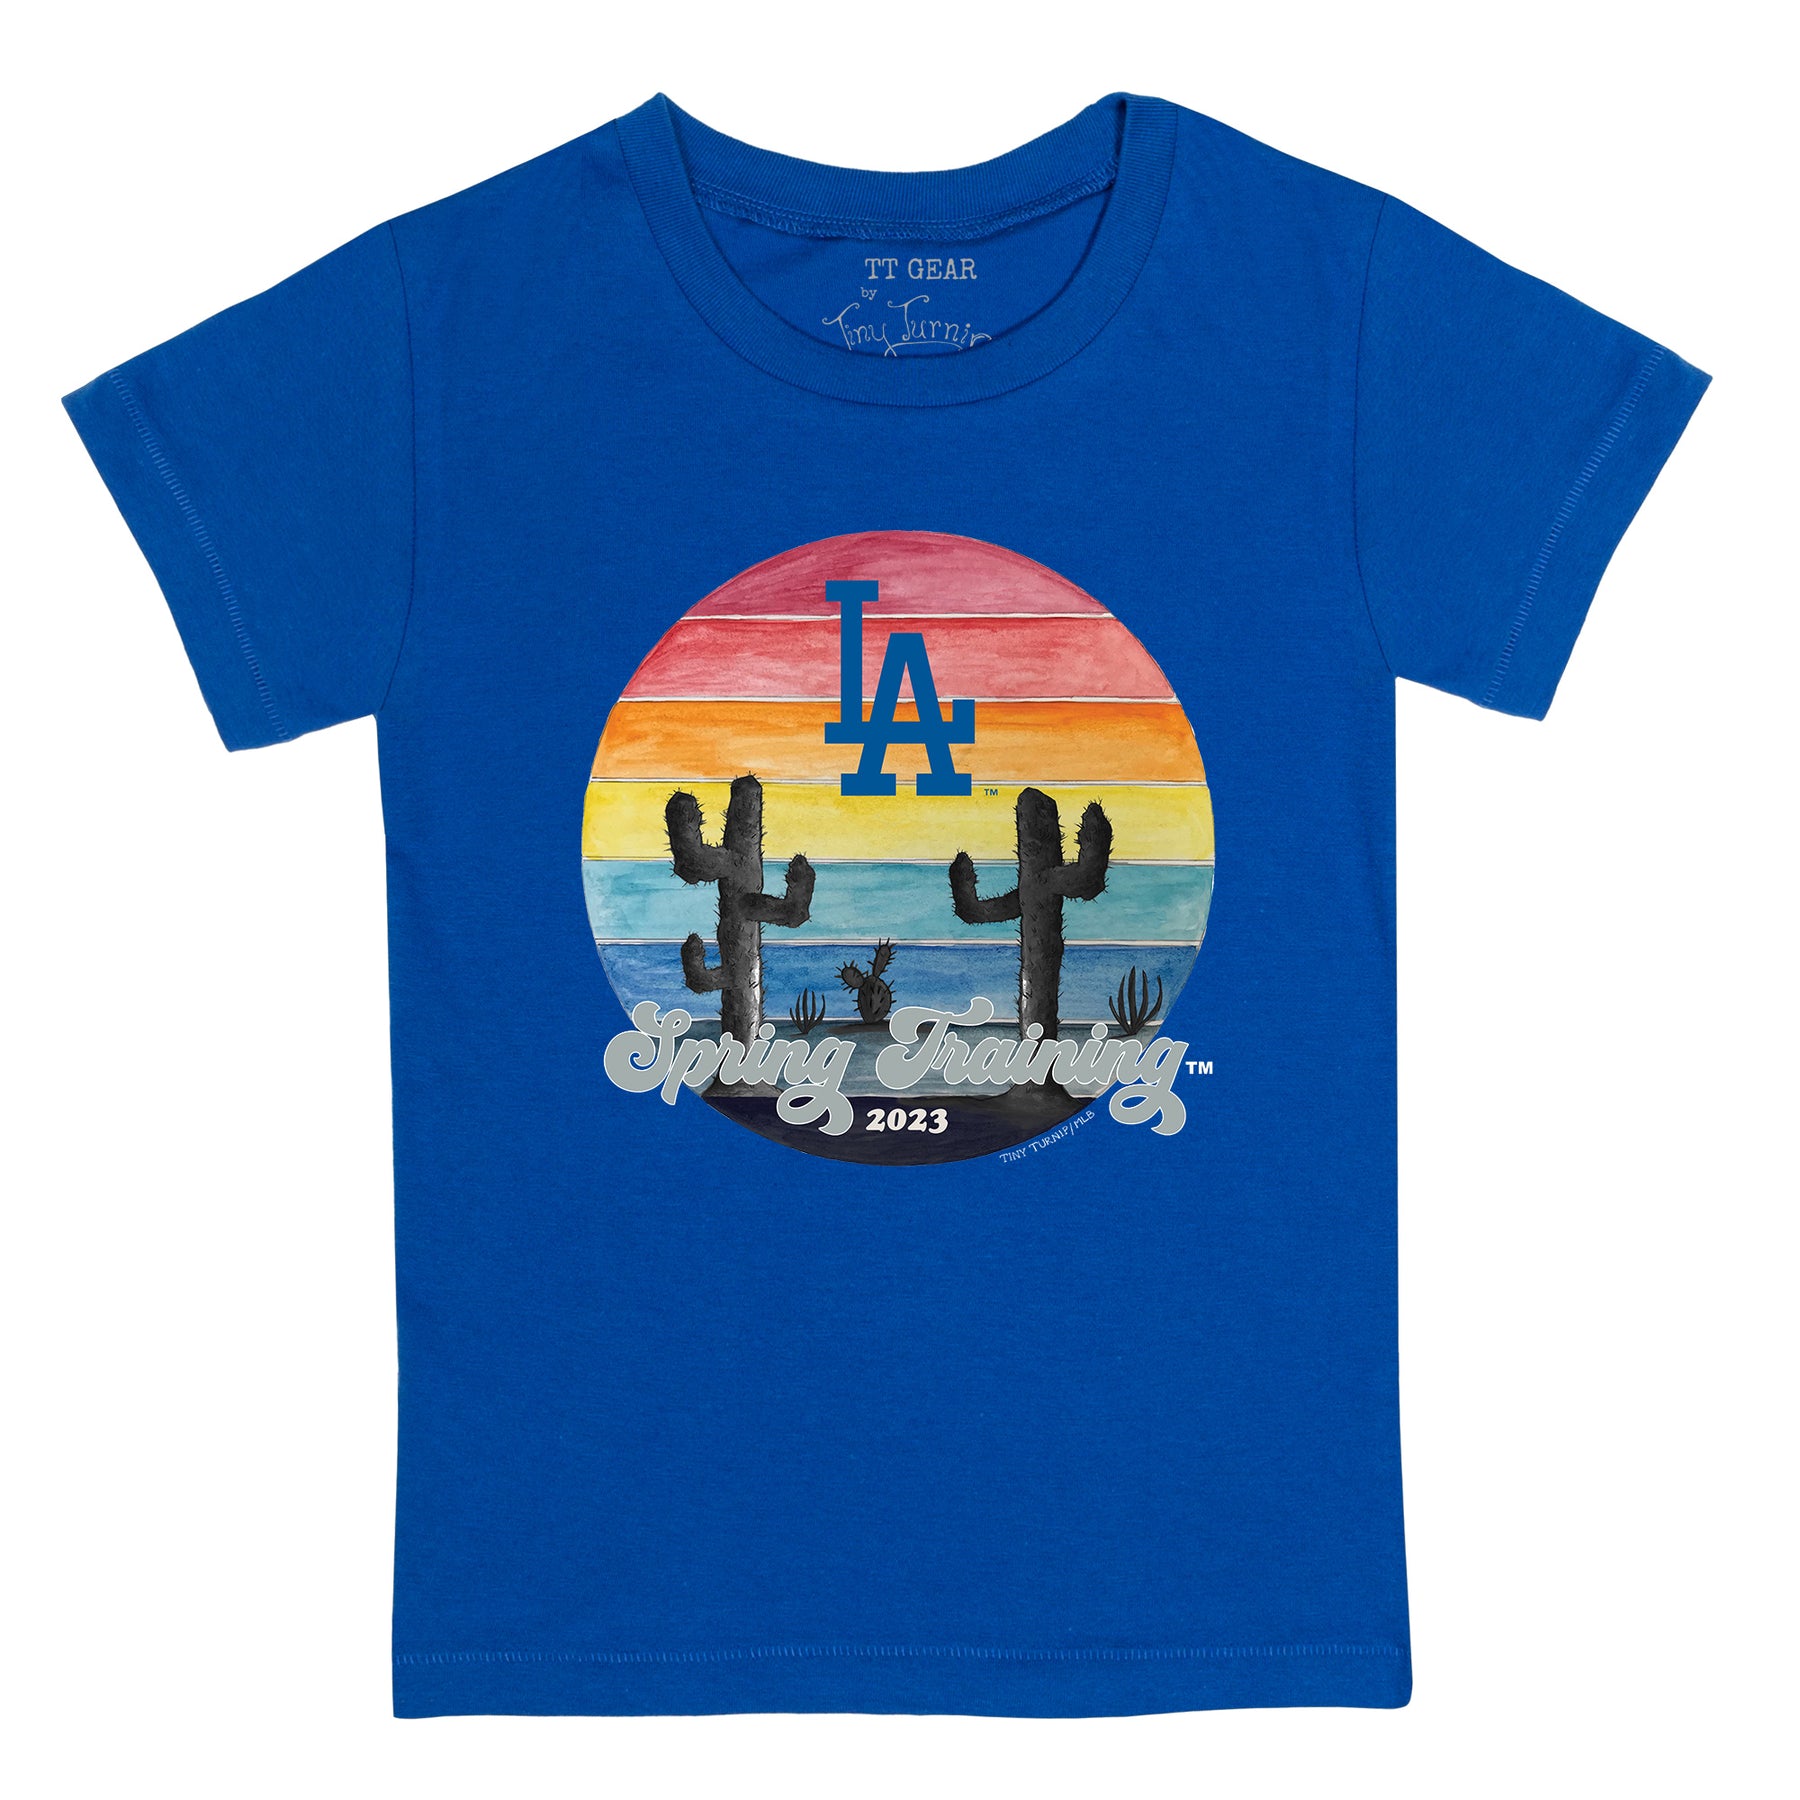 Toddler Tiny Turnip White Los Angeles Dodgers TT Rex T-Shirt